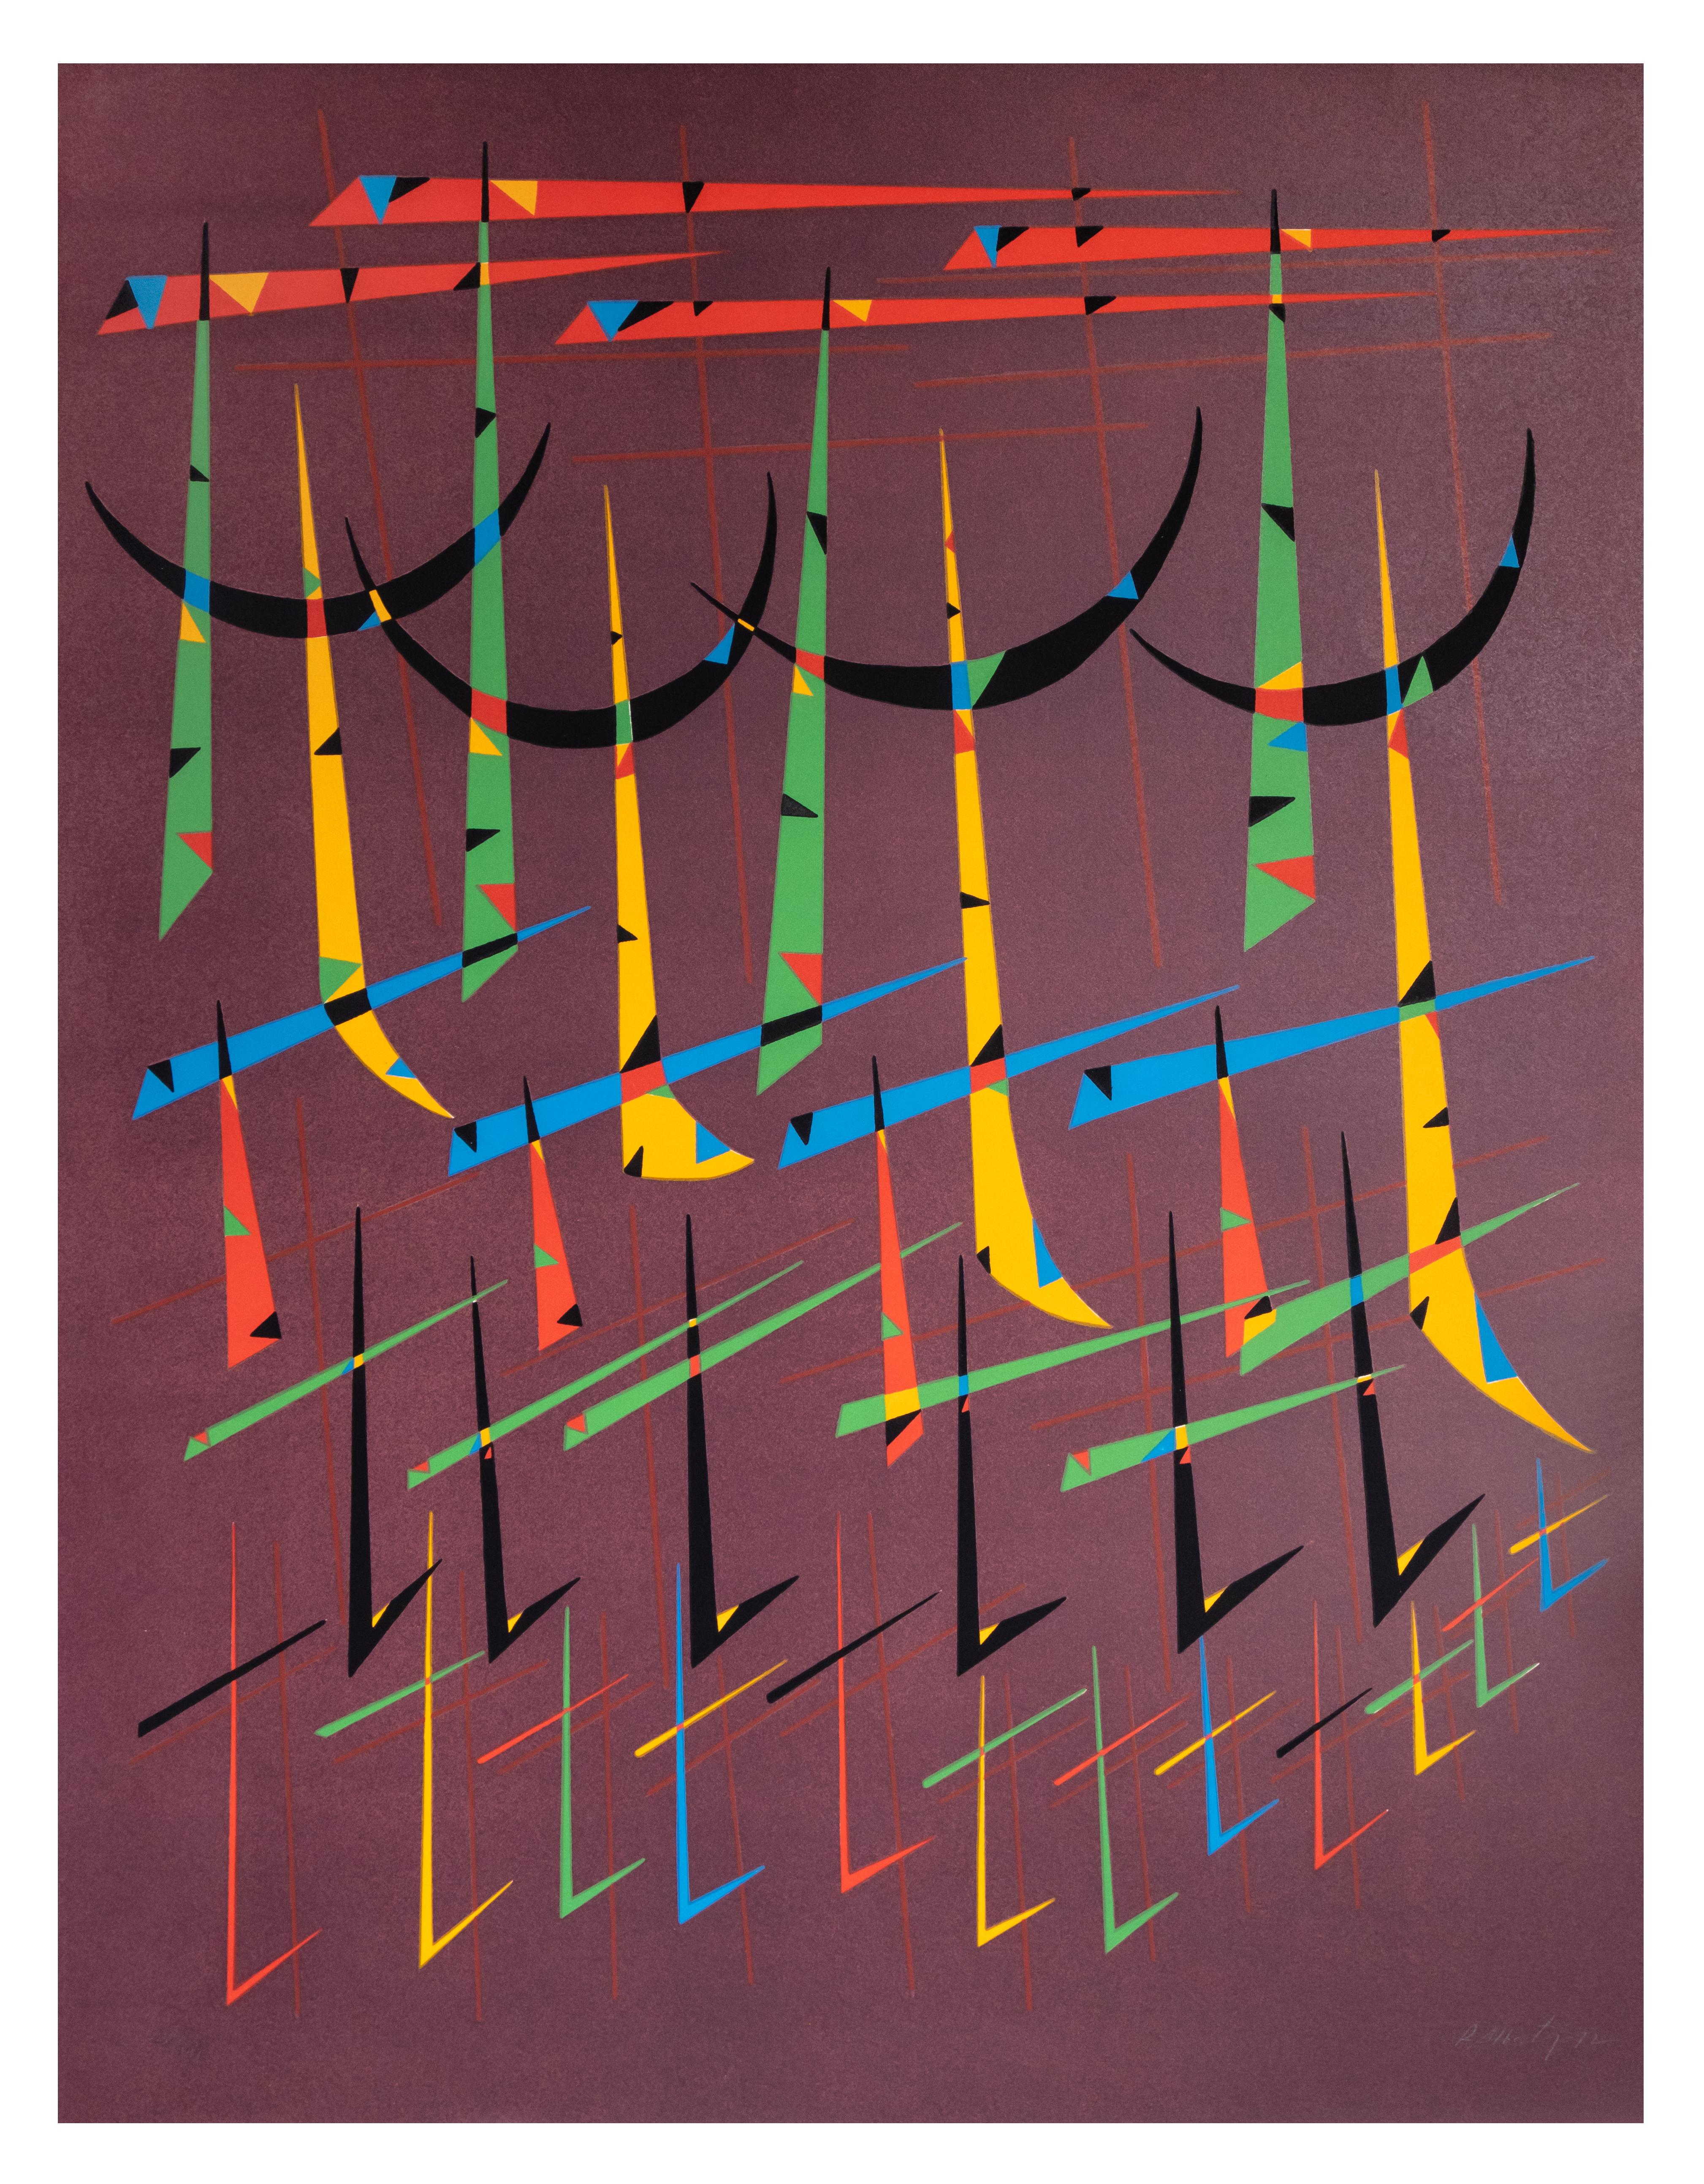 Rafael Alberti Abstract Print - Letter T - Original Lithograph by Raphael Alberti - 1972